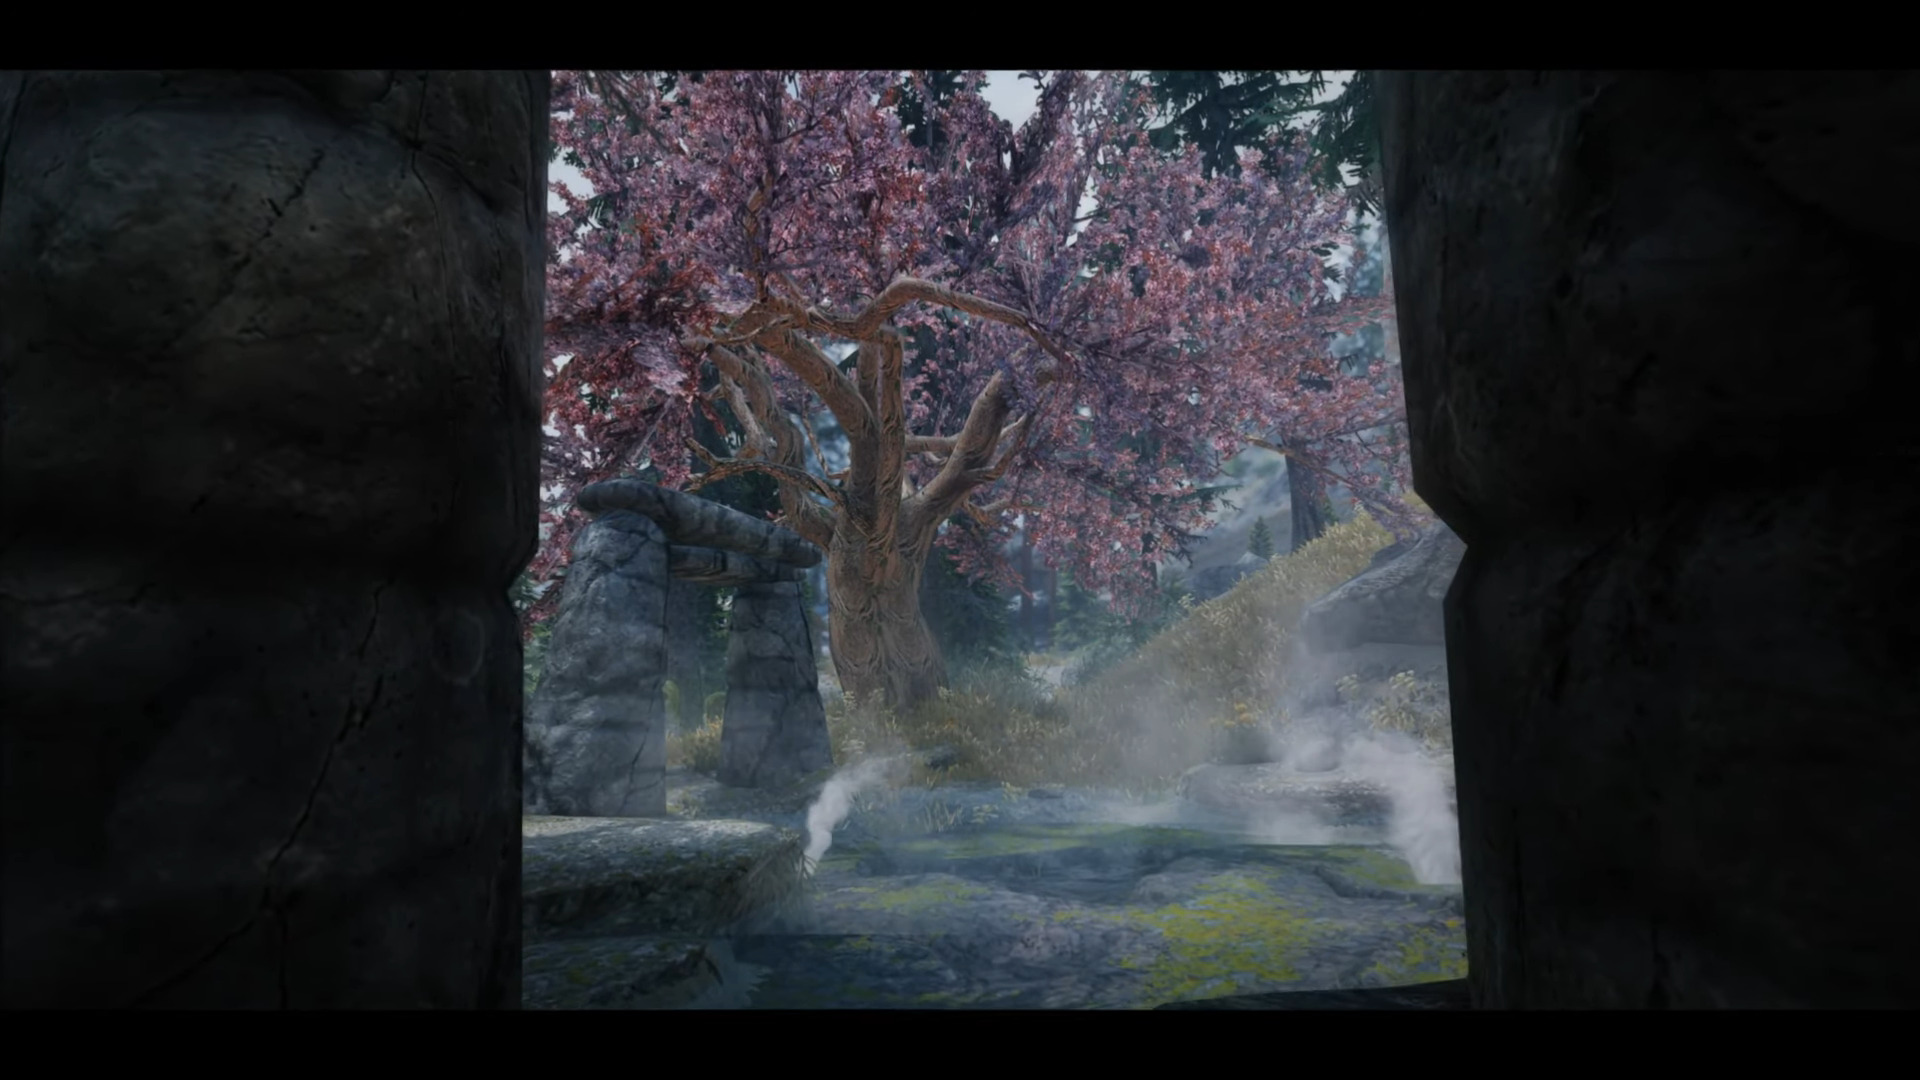 Elder Scrolls 5 Skyrim Special Edition Weekly Mod Showcase 11/29 Features Kynesgrove Rework